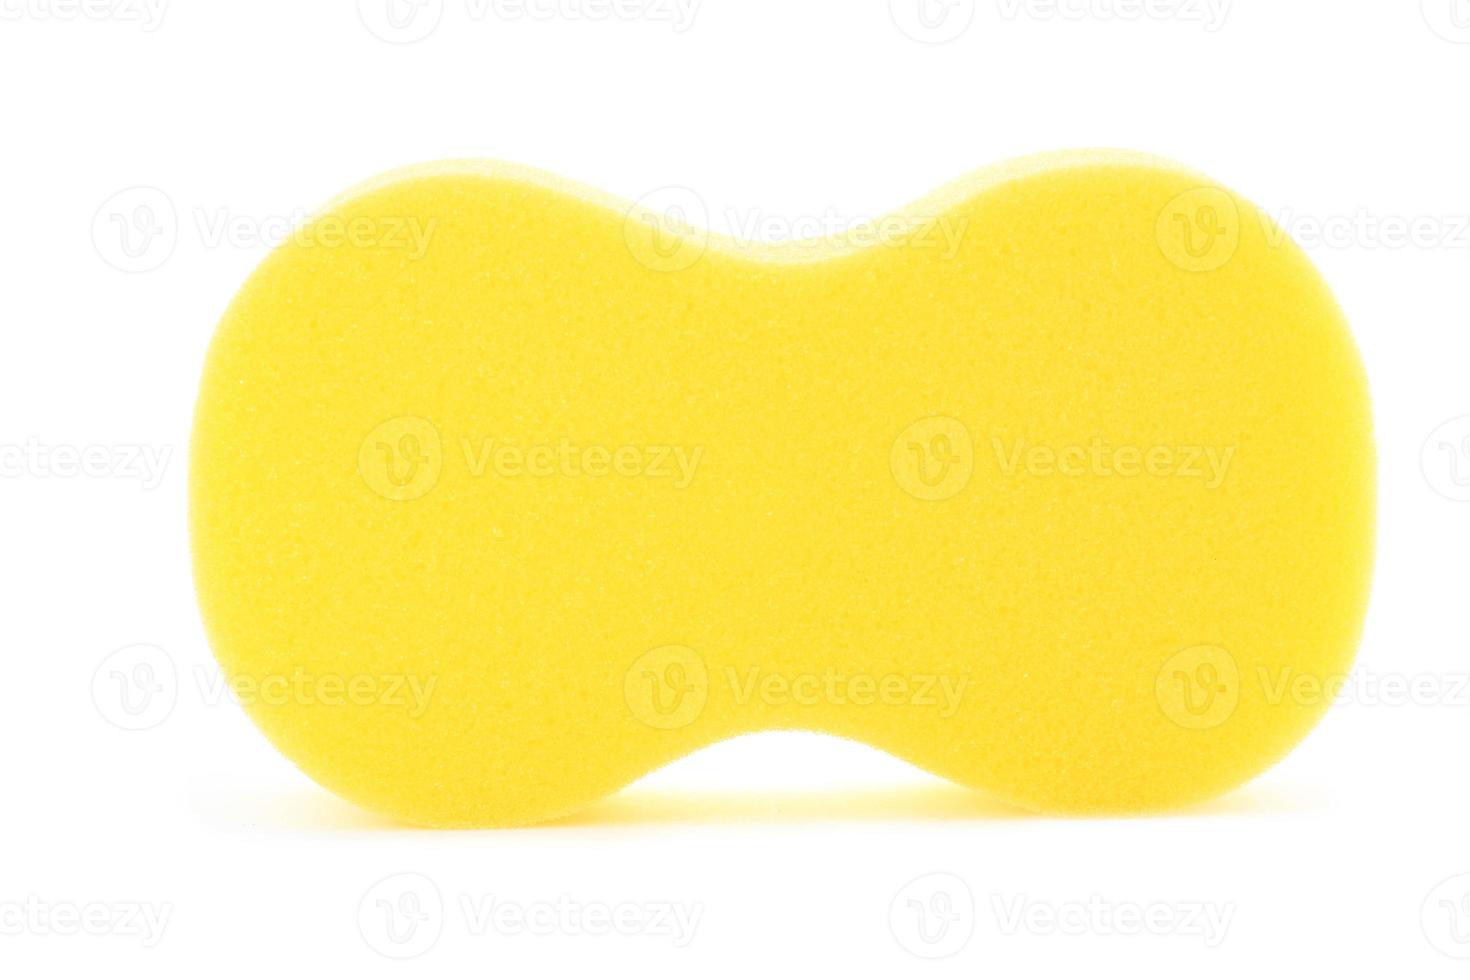 esponja sobre fundo branco. esponja de limpeza doméstica amarela foto